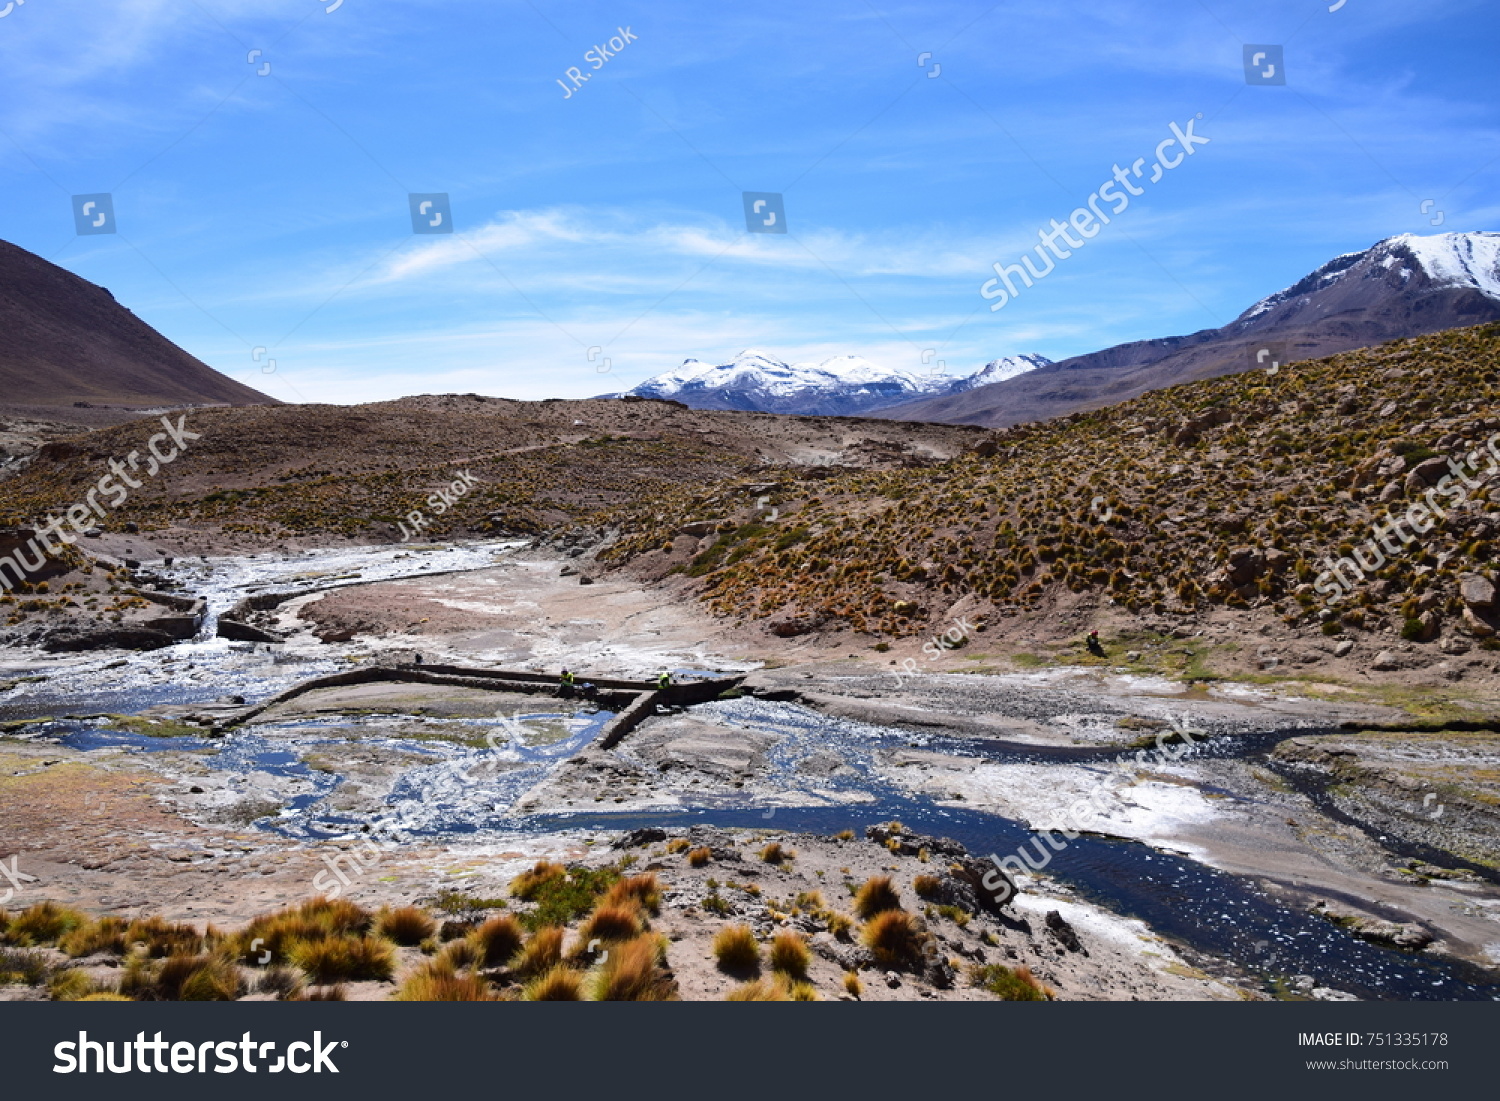 Mountain stream in Chilean Atacama Andes. #751335178